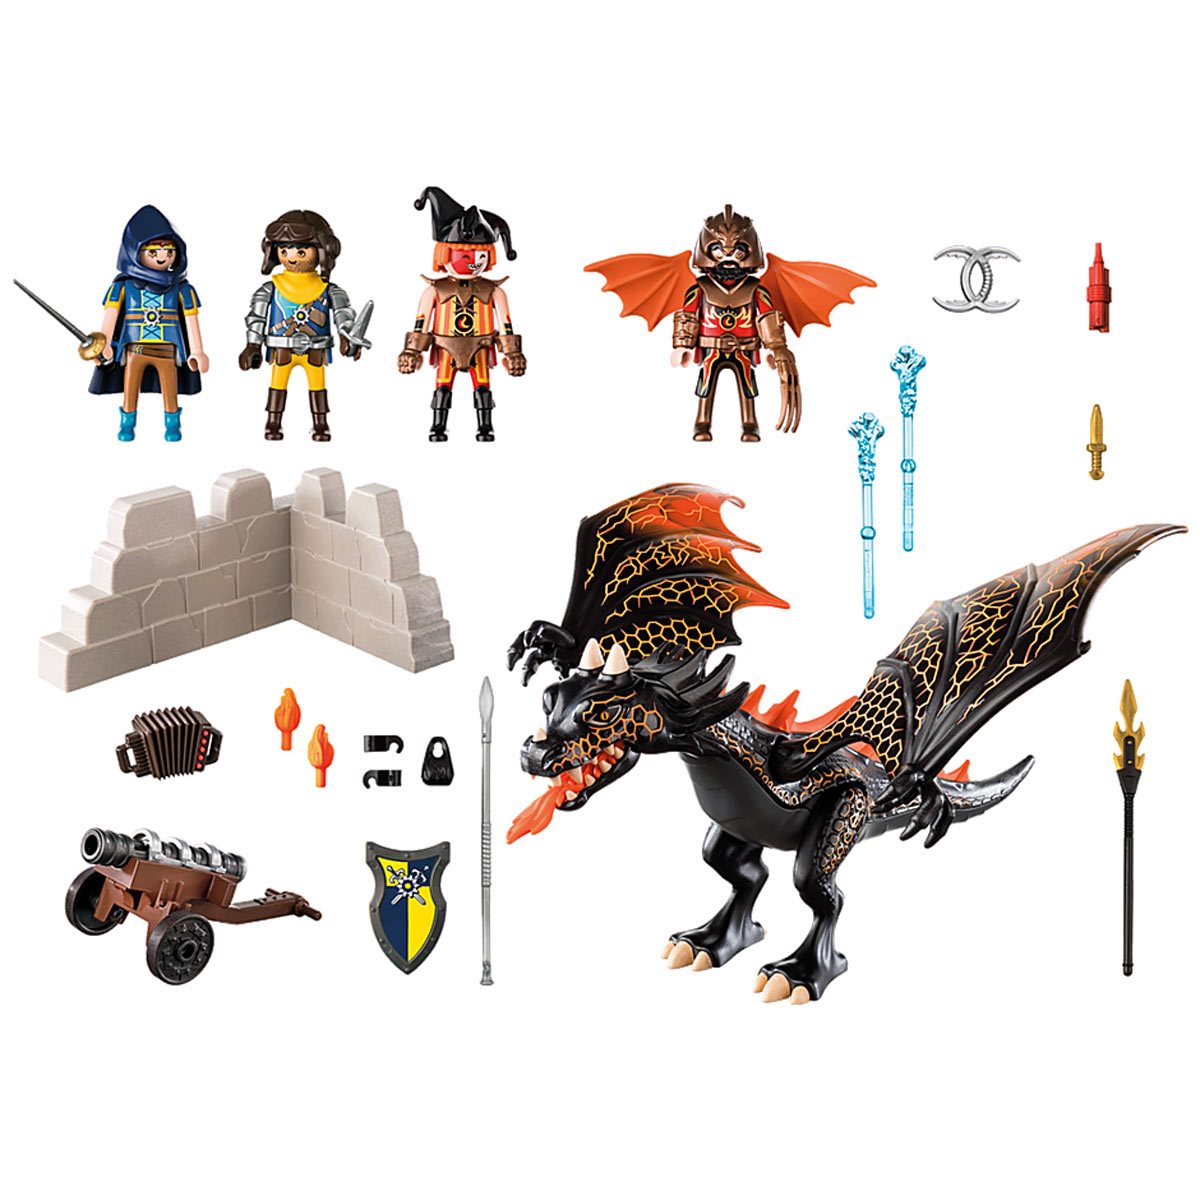 Playmobil Dragons - Entertainment Earth